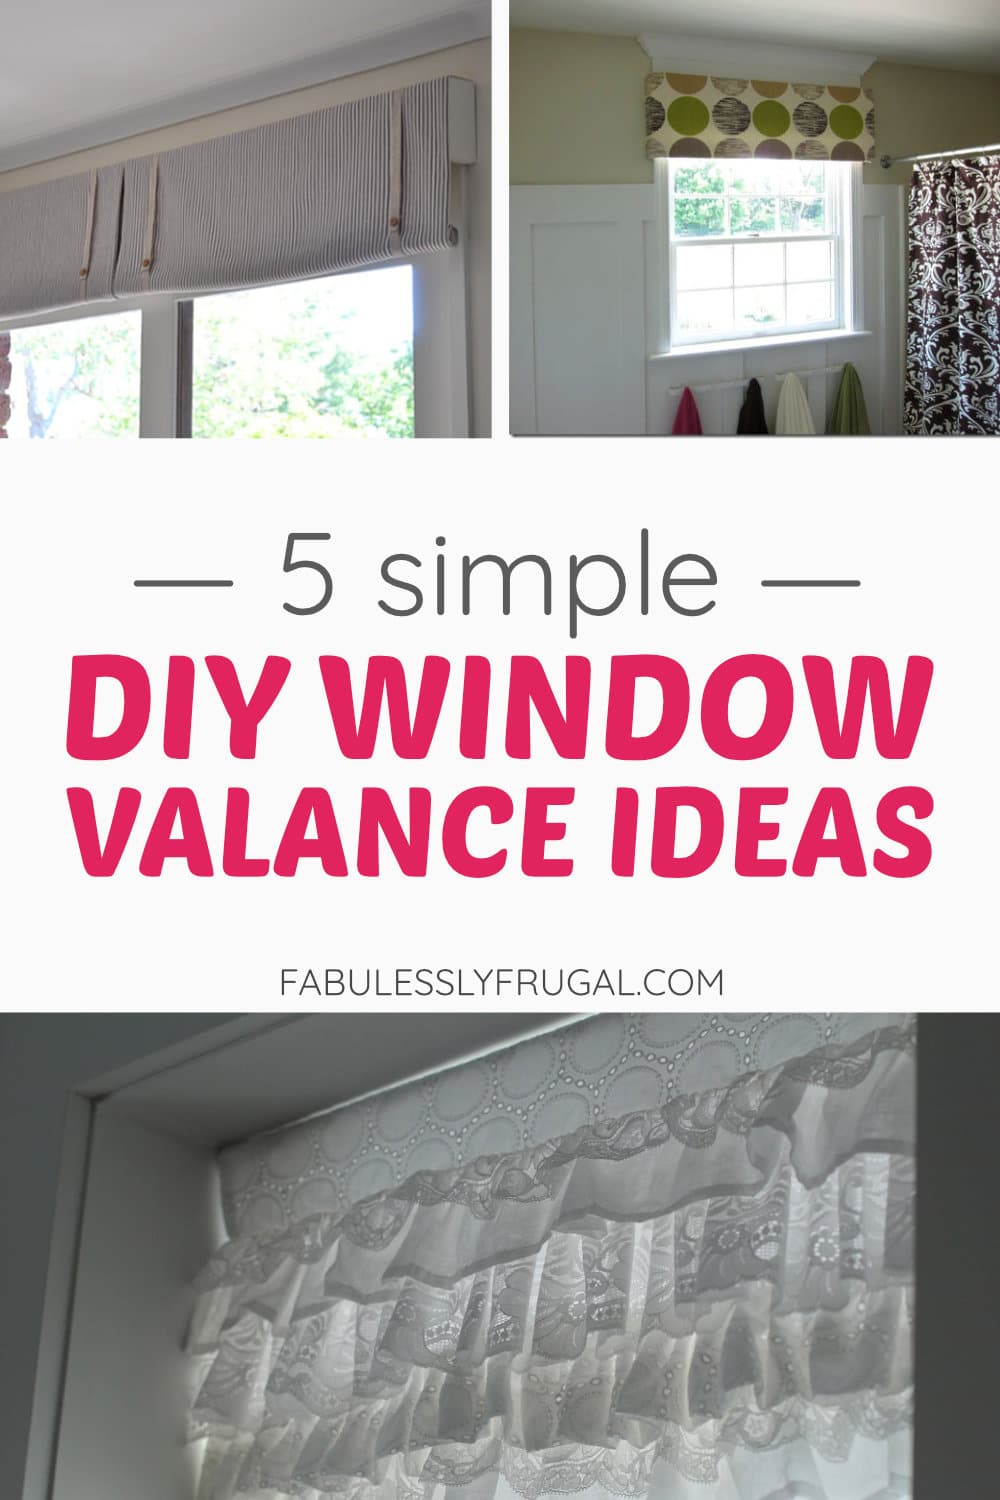 Simple DIY window valance ideas